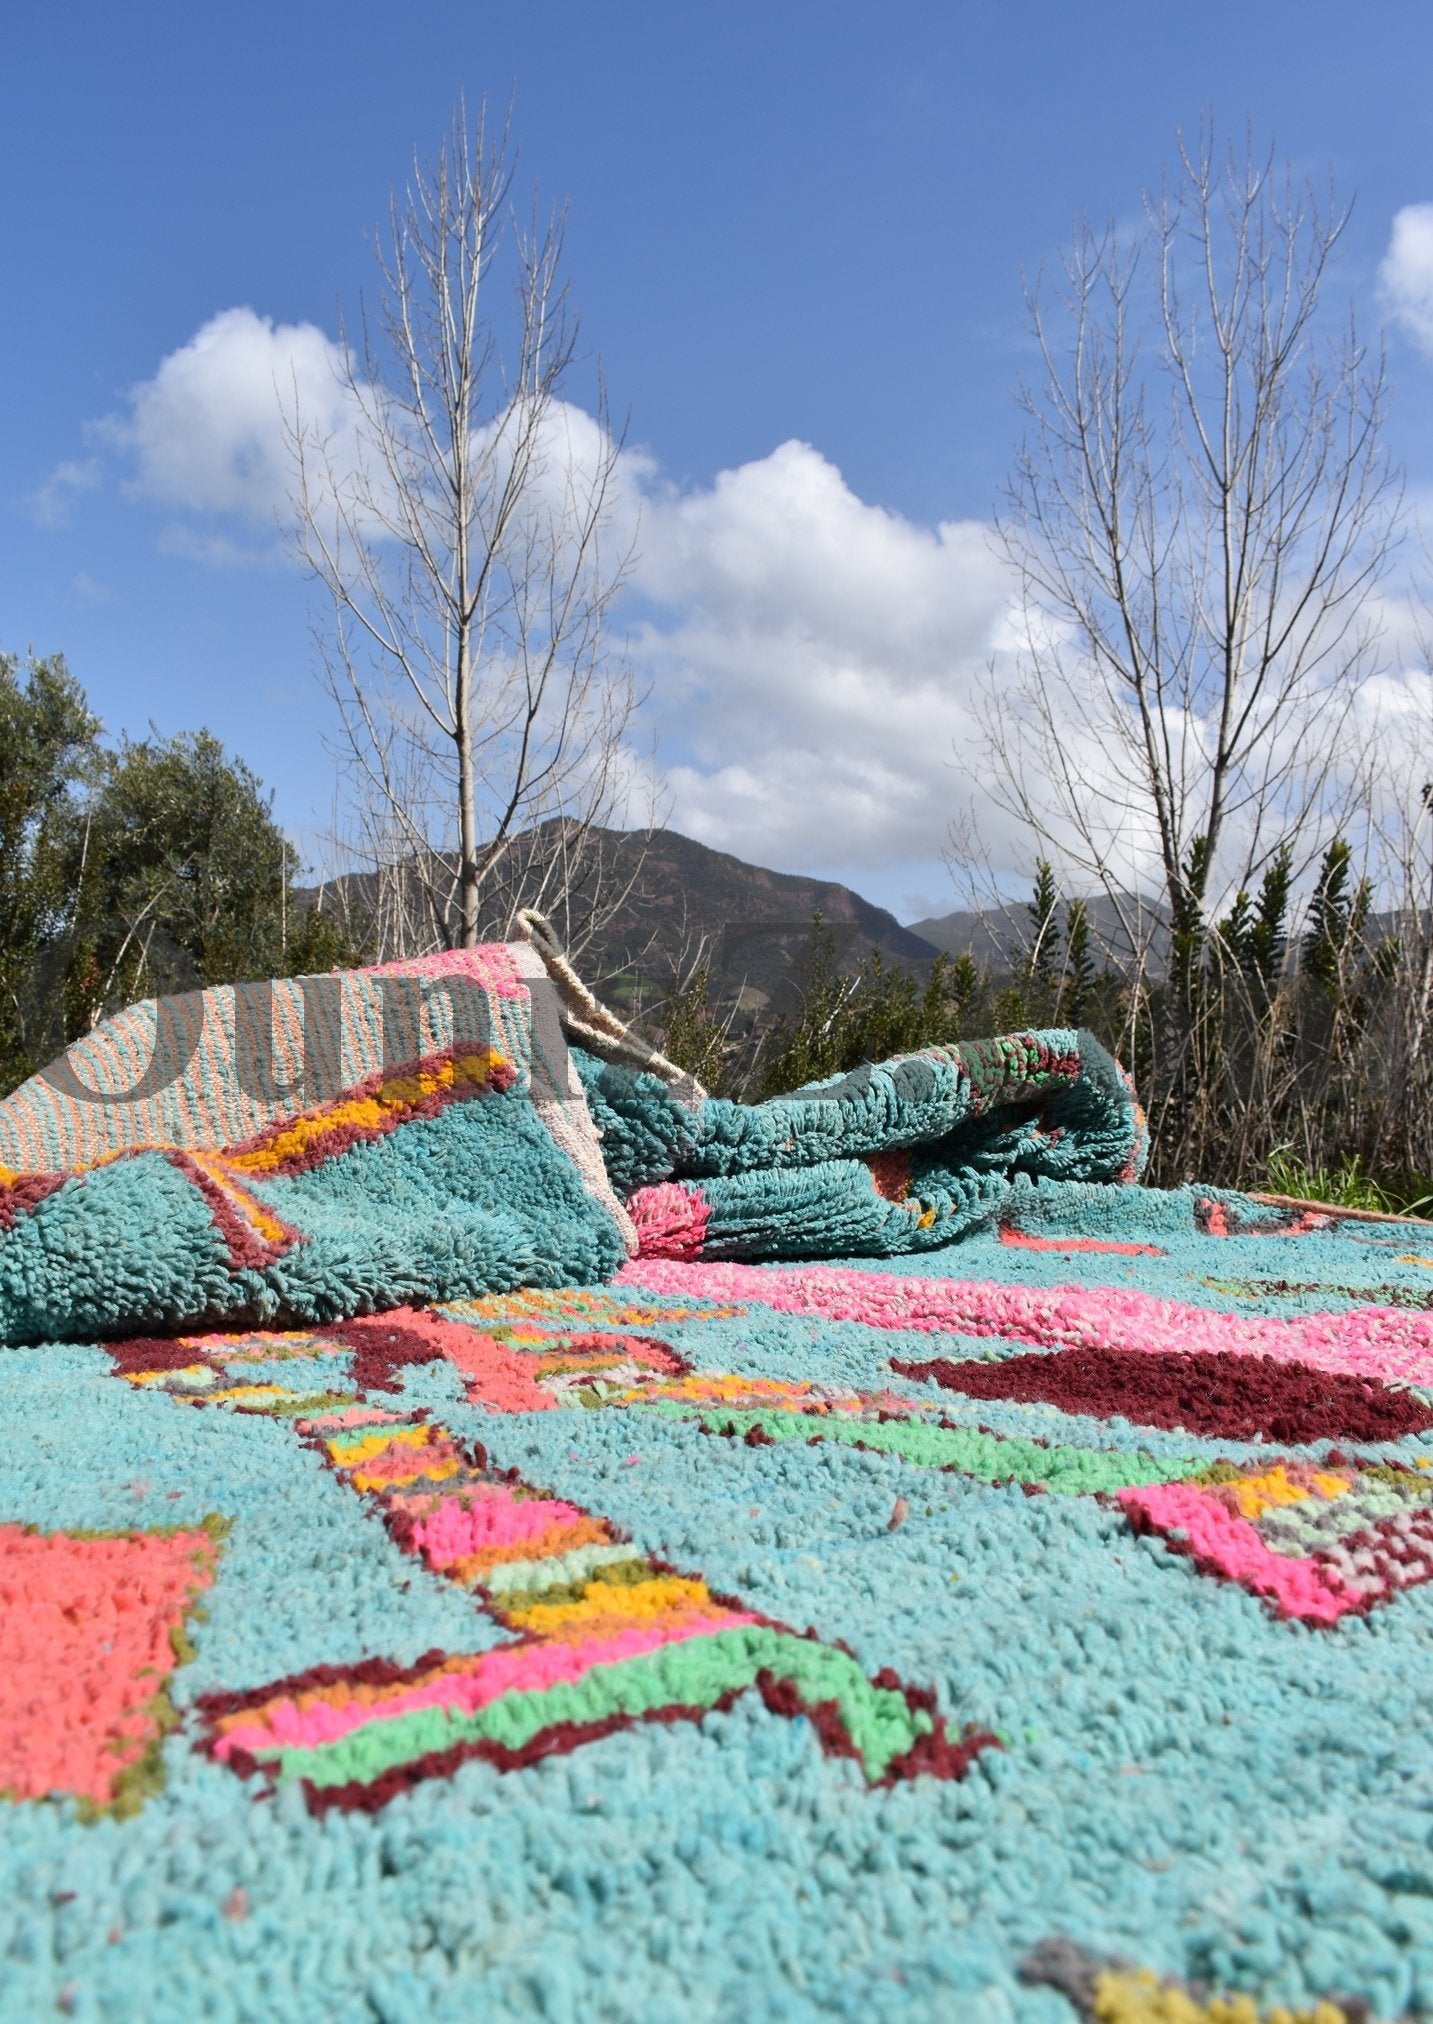 TAMETE | Boujaad Rug | 100% wool handmade in Morocco - OunizZ